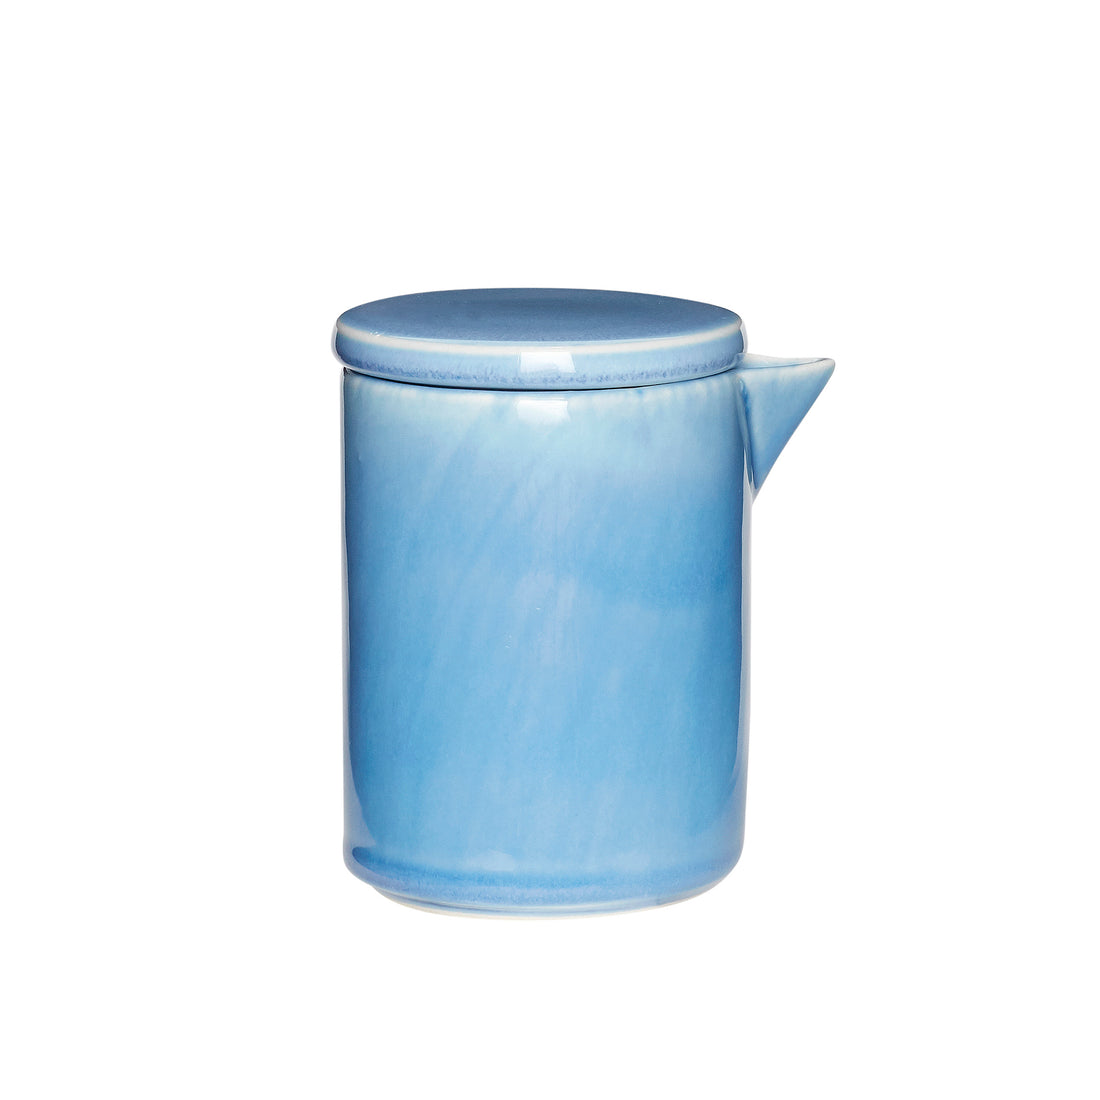 House Doctor - Milk jug, ceramic, blue Ø9xh9cm